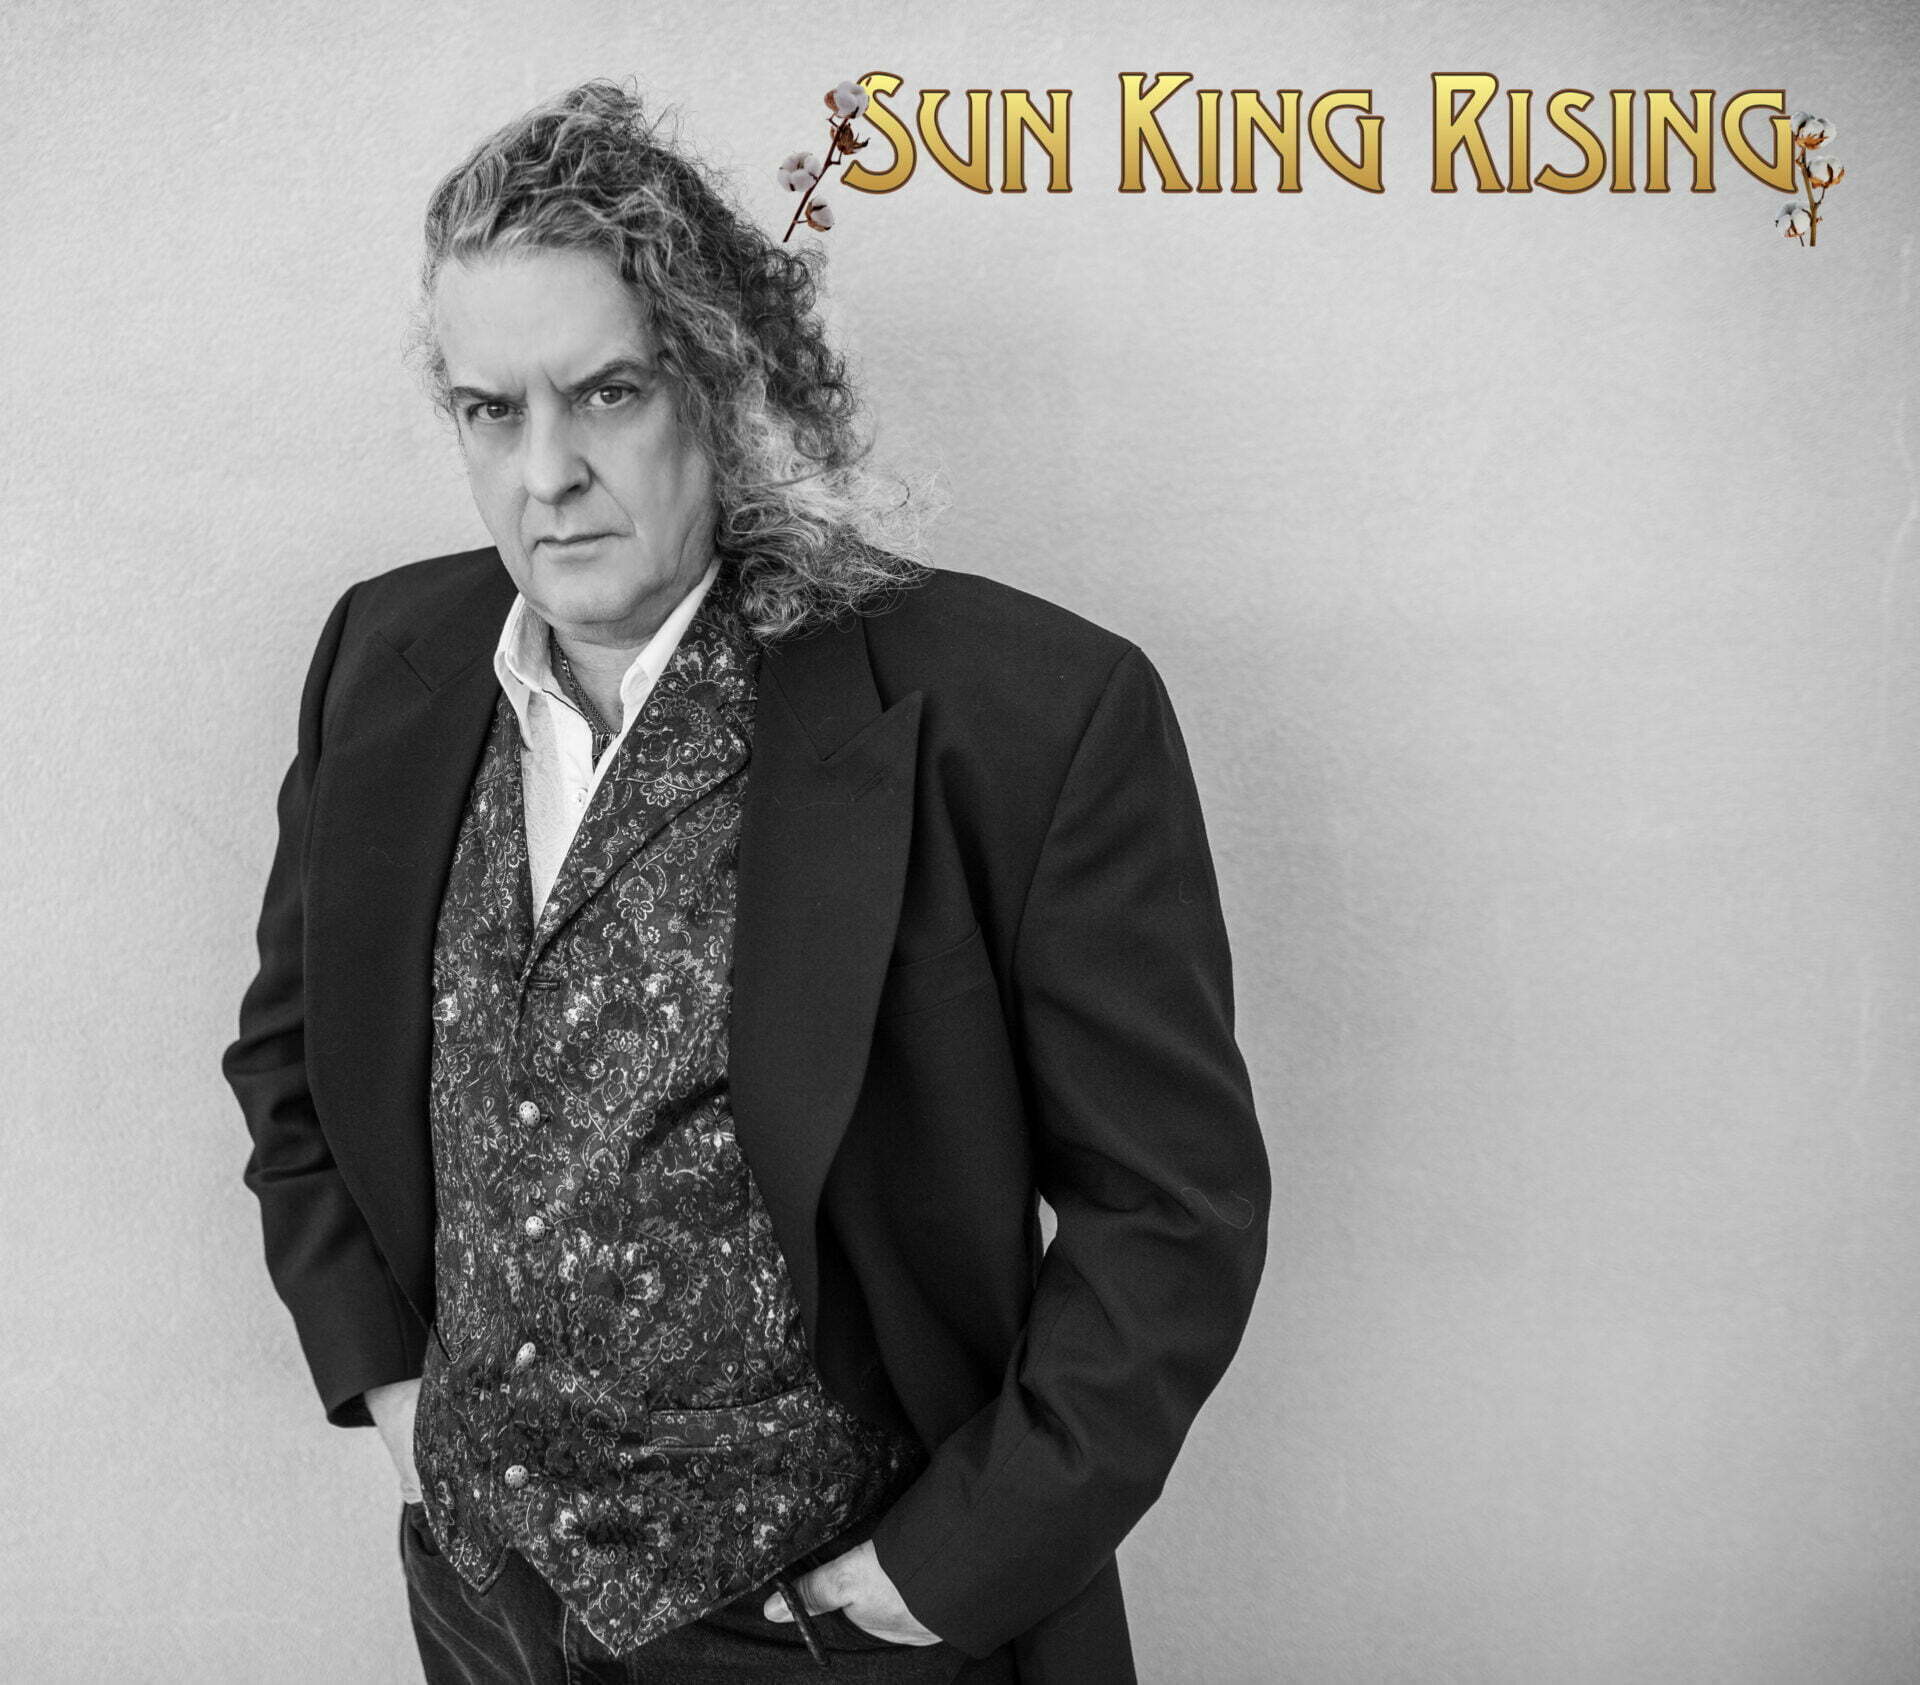 Sun King Rising released serene new song 'No. 6 Magnolia Avenue'